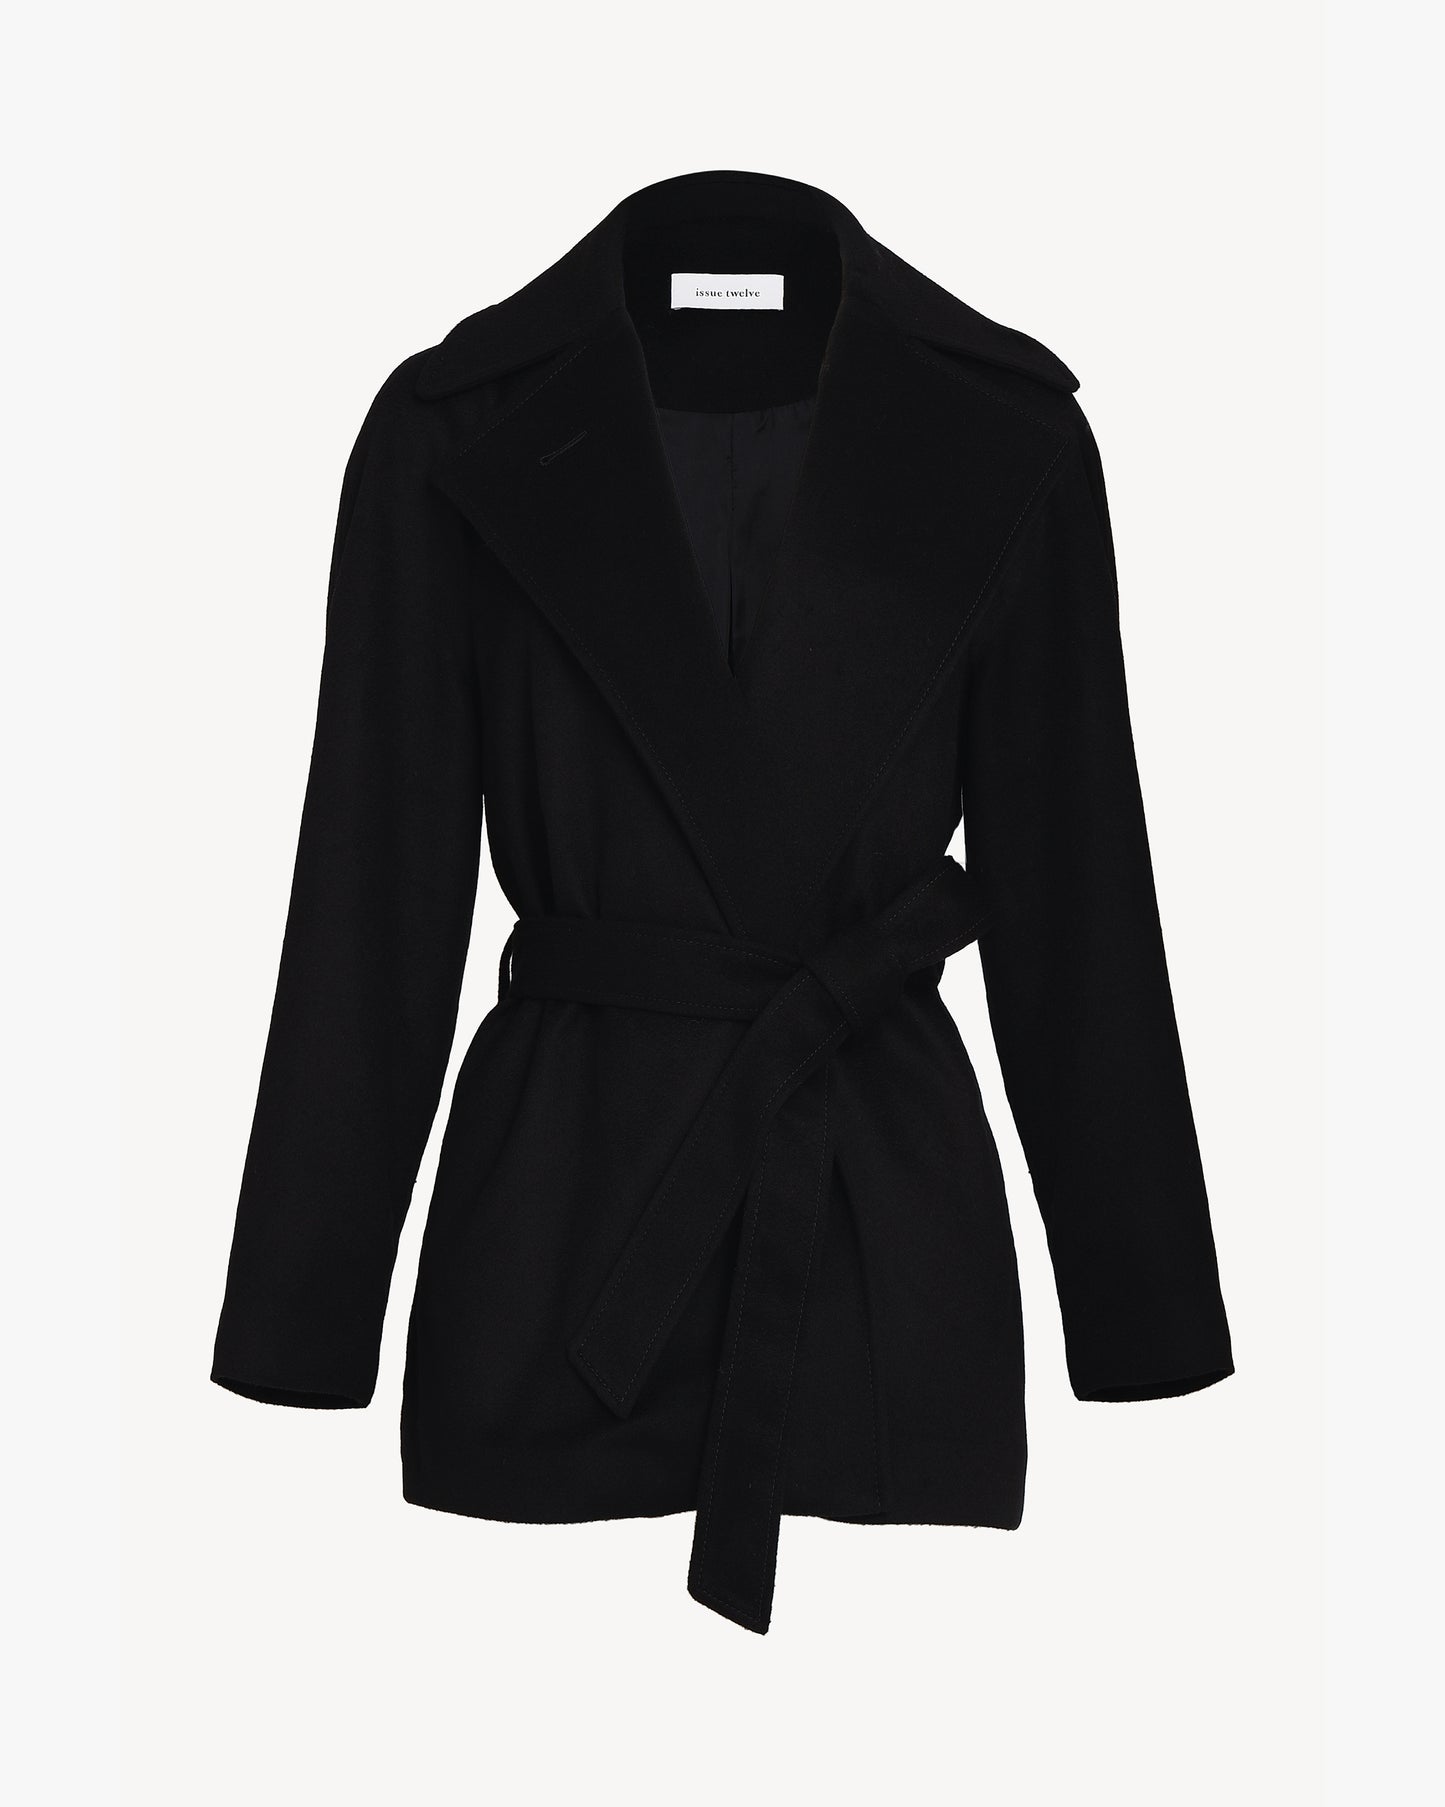 Issue Twelve Emma Coat in Black Wool Cashmere 